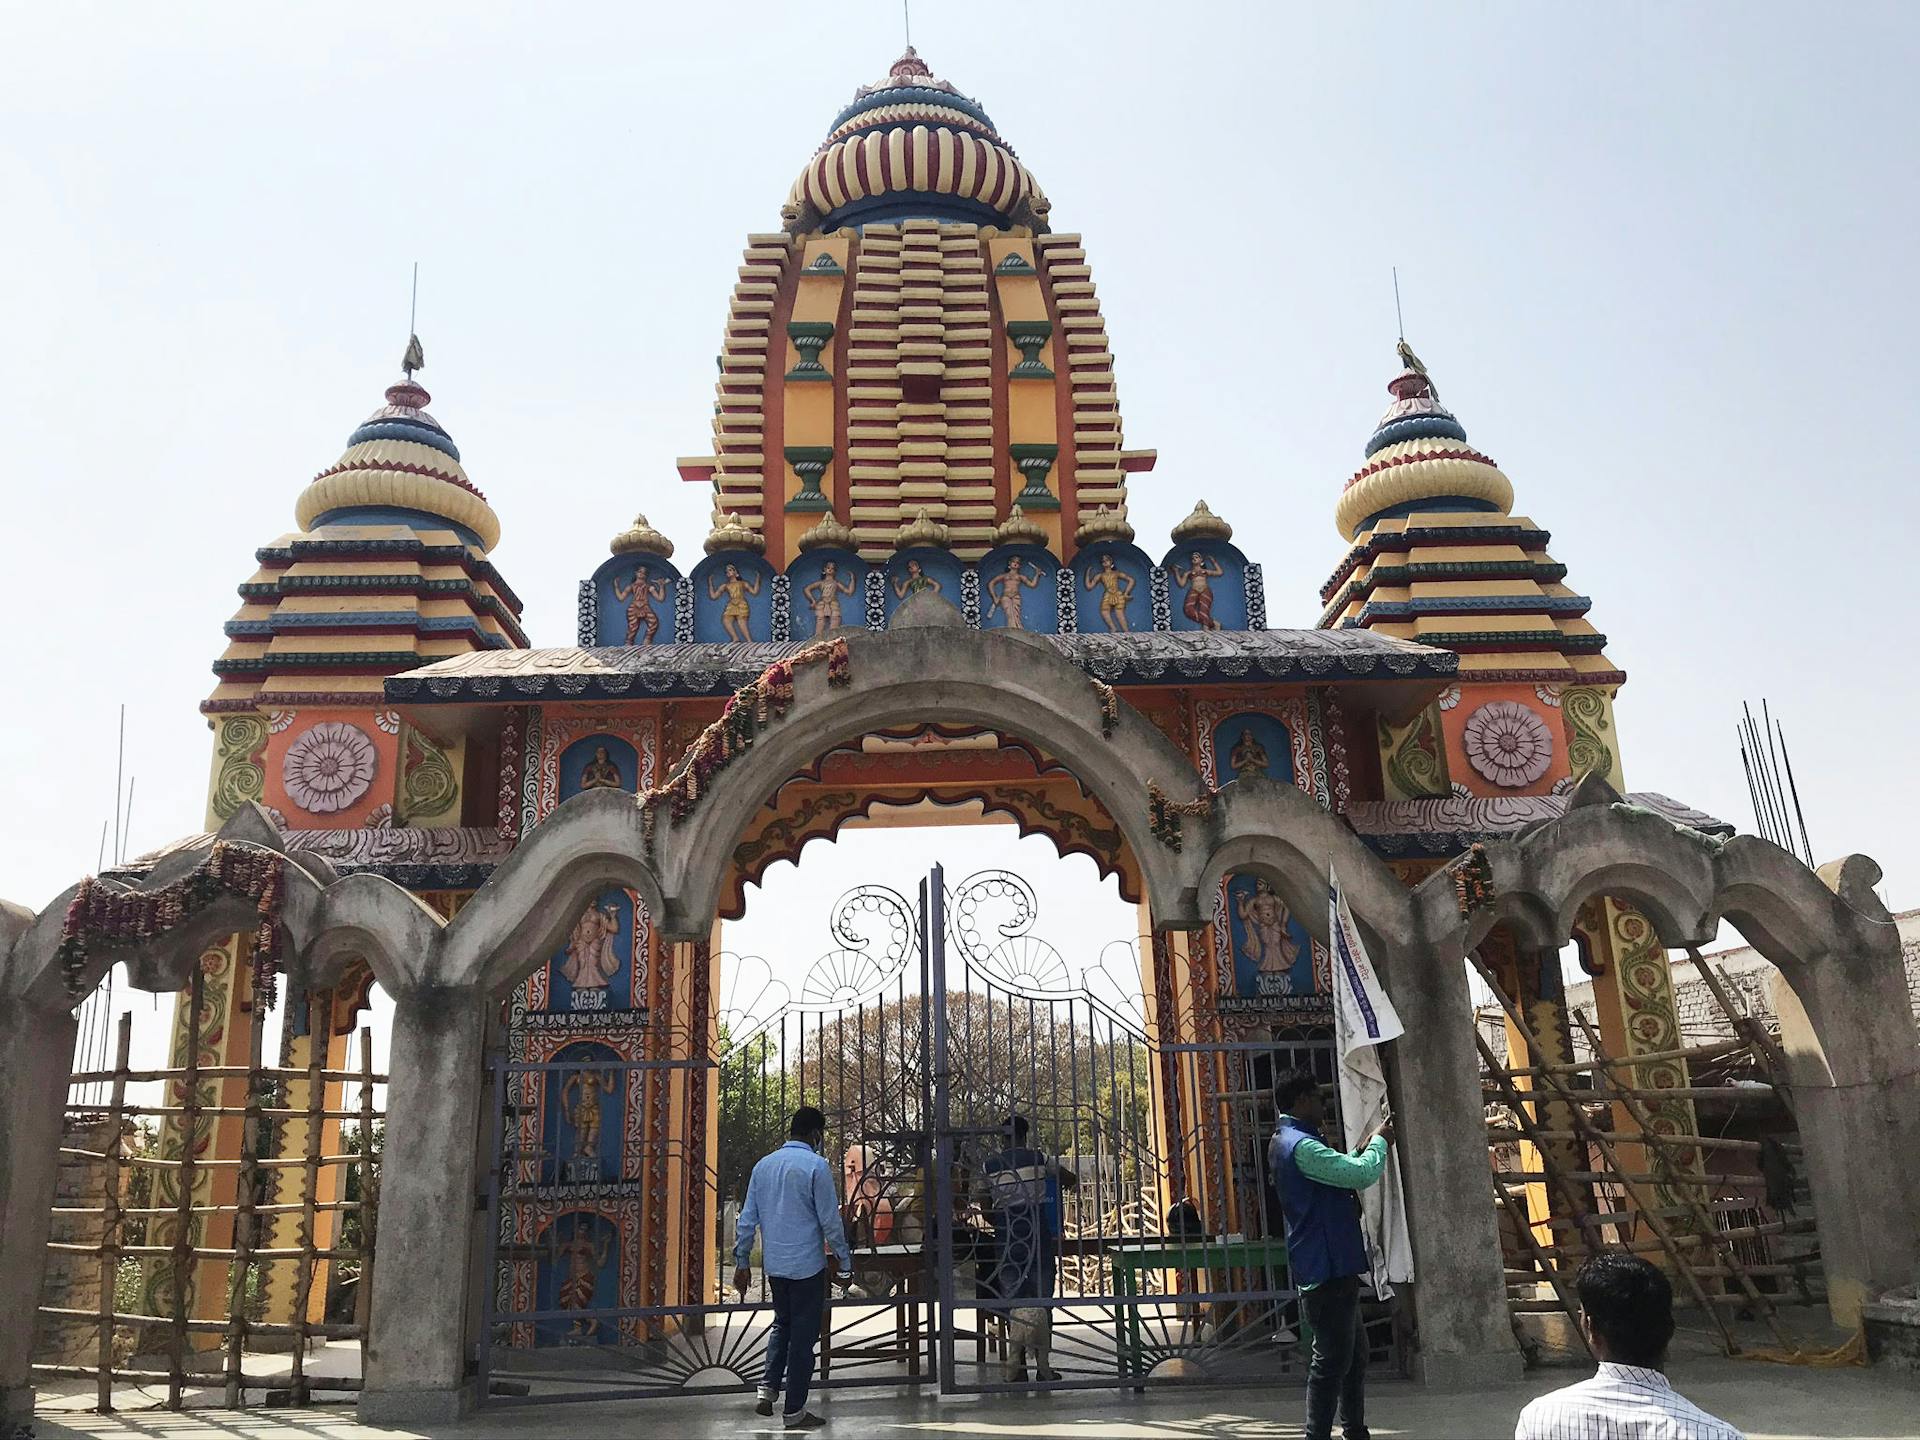 The entrance to the Hathikheda temple in Laujora village, East Singhbhum district. Credit: Hansda Sowvendra Shekhar